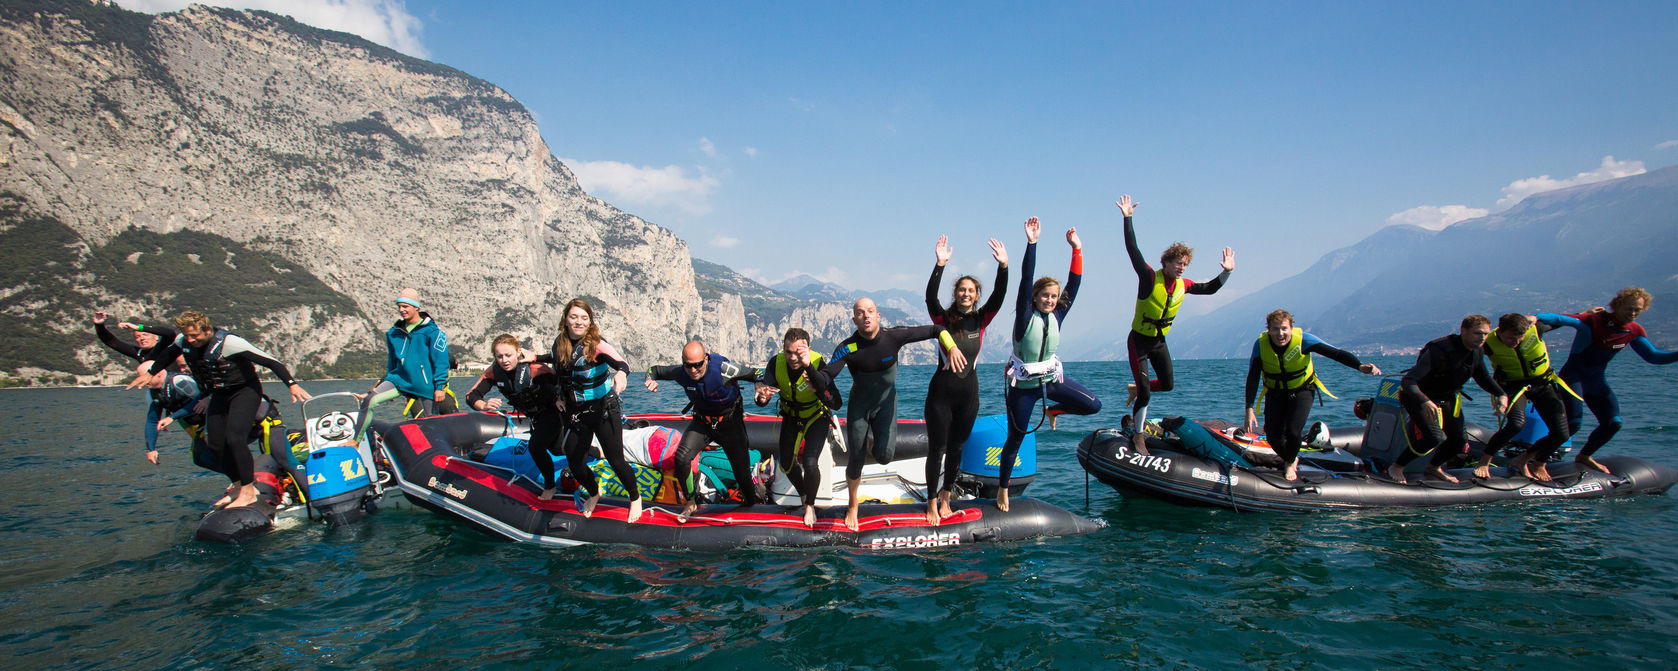 Kitesurfing school Lake Garda